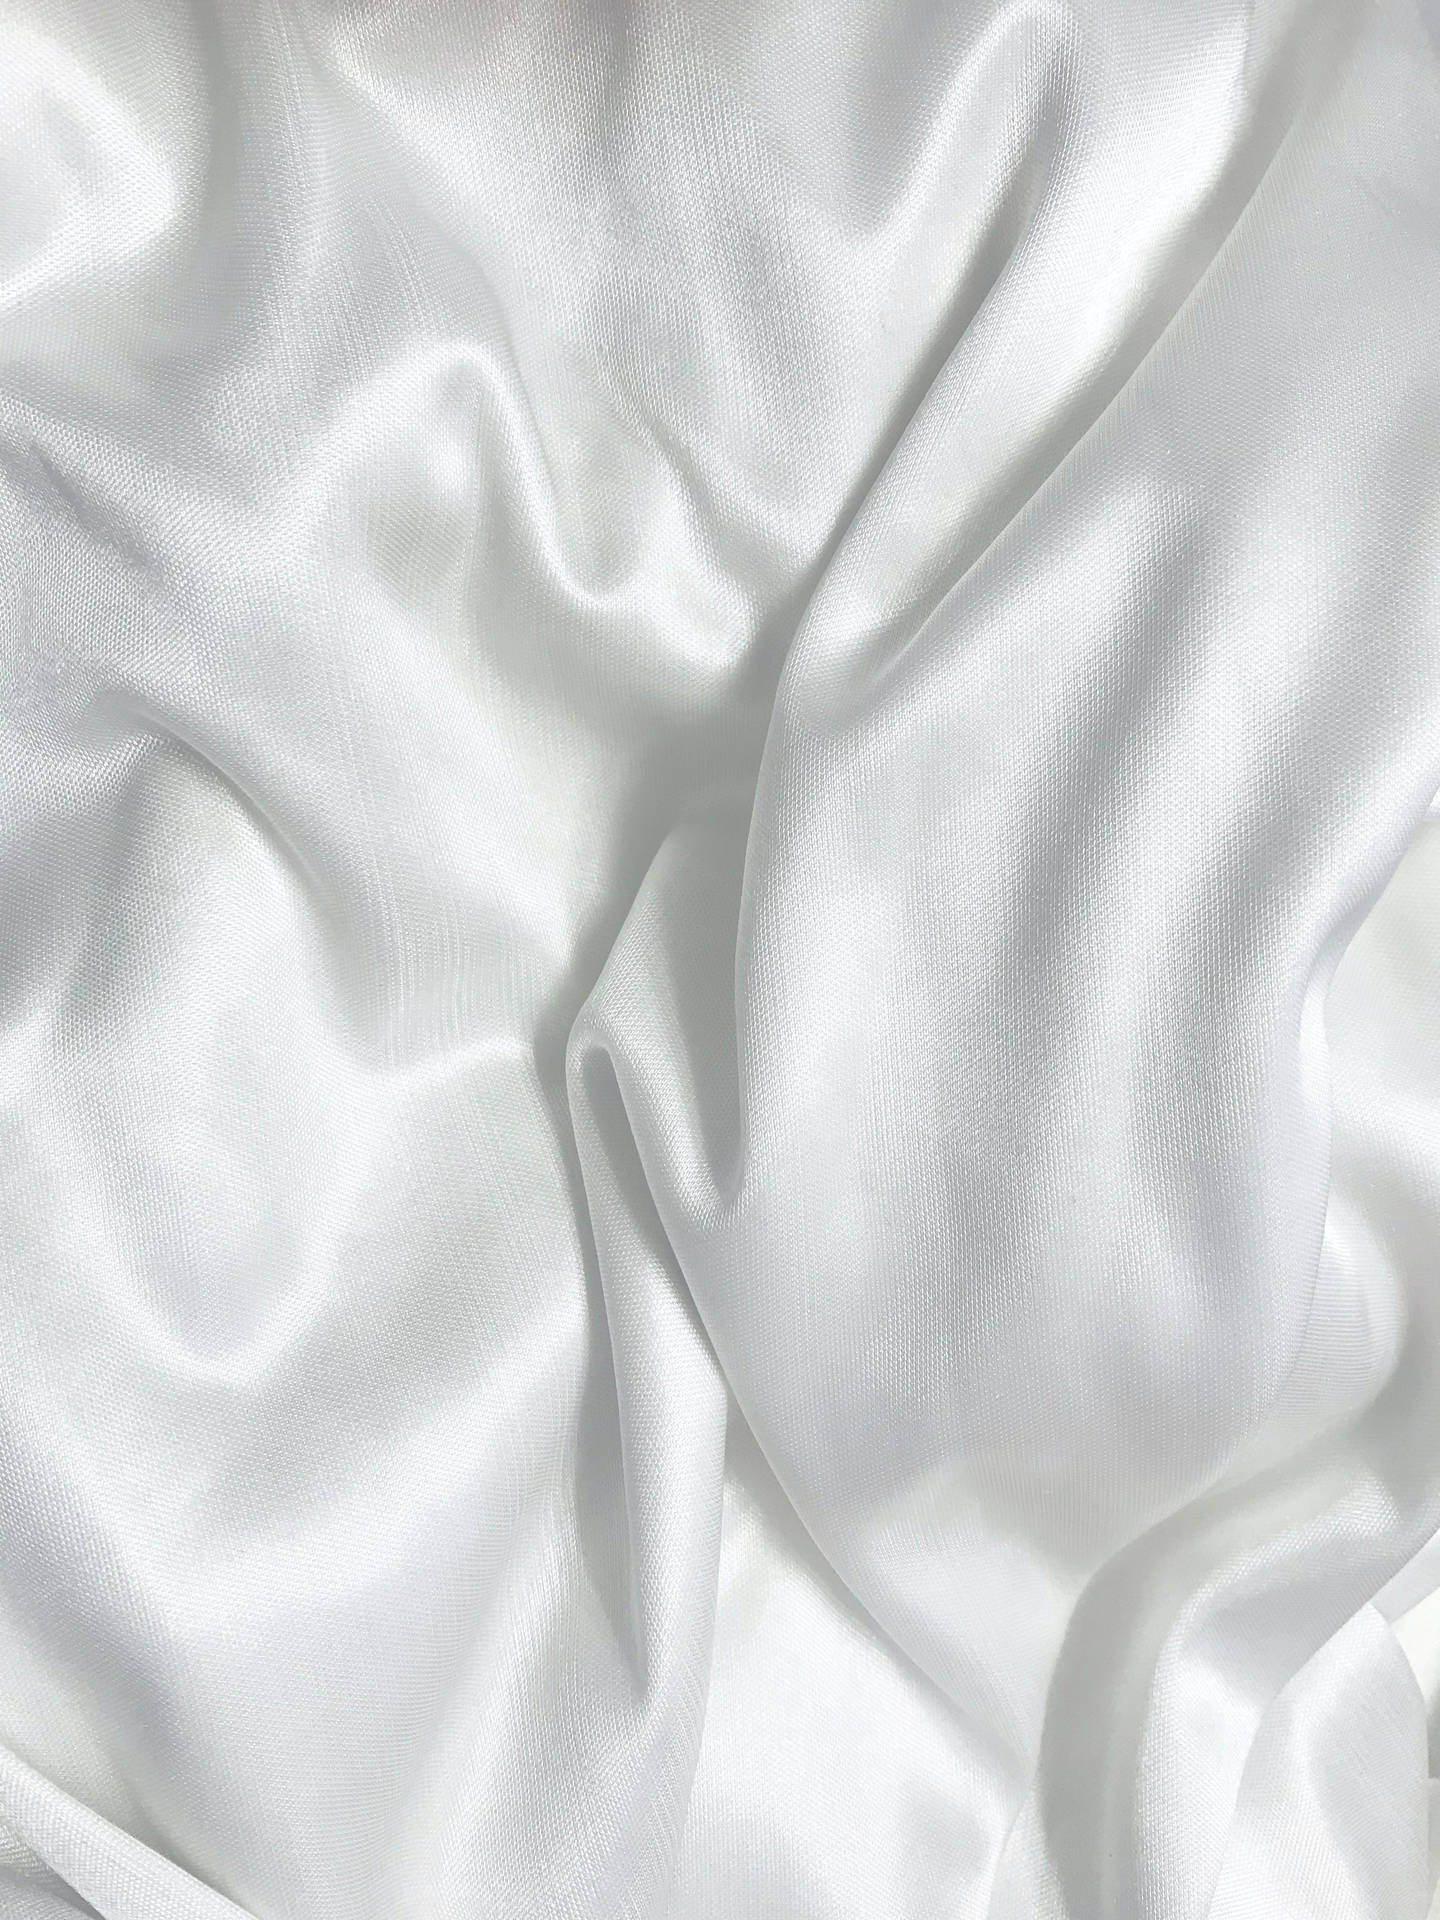 Silk Fabric White Pattern Wallpaper